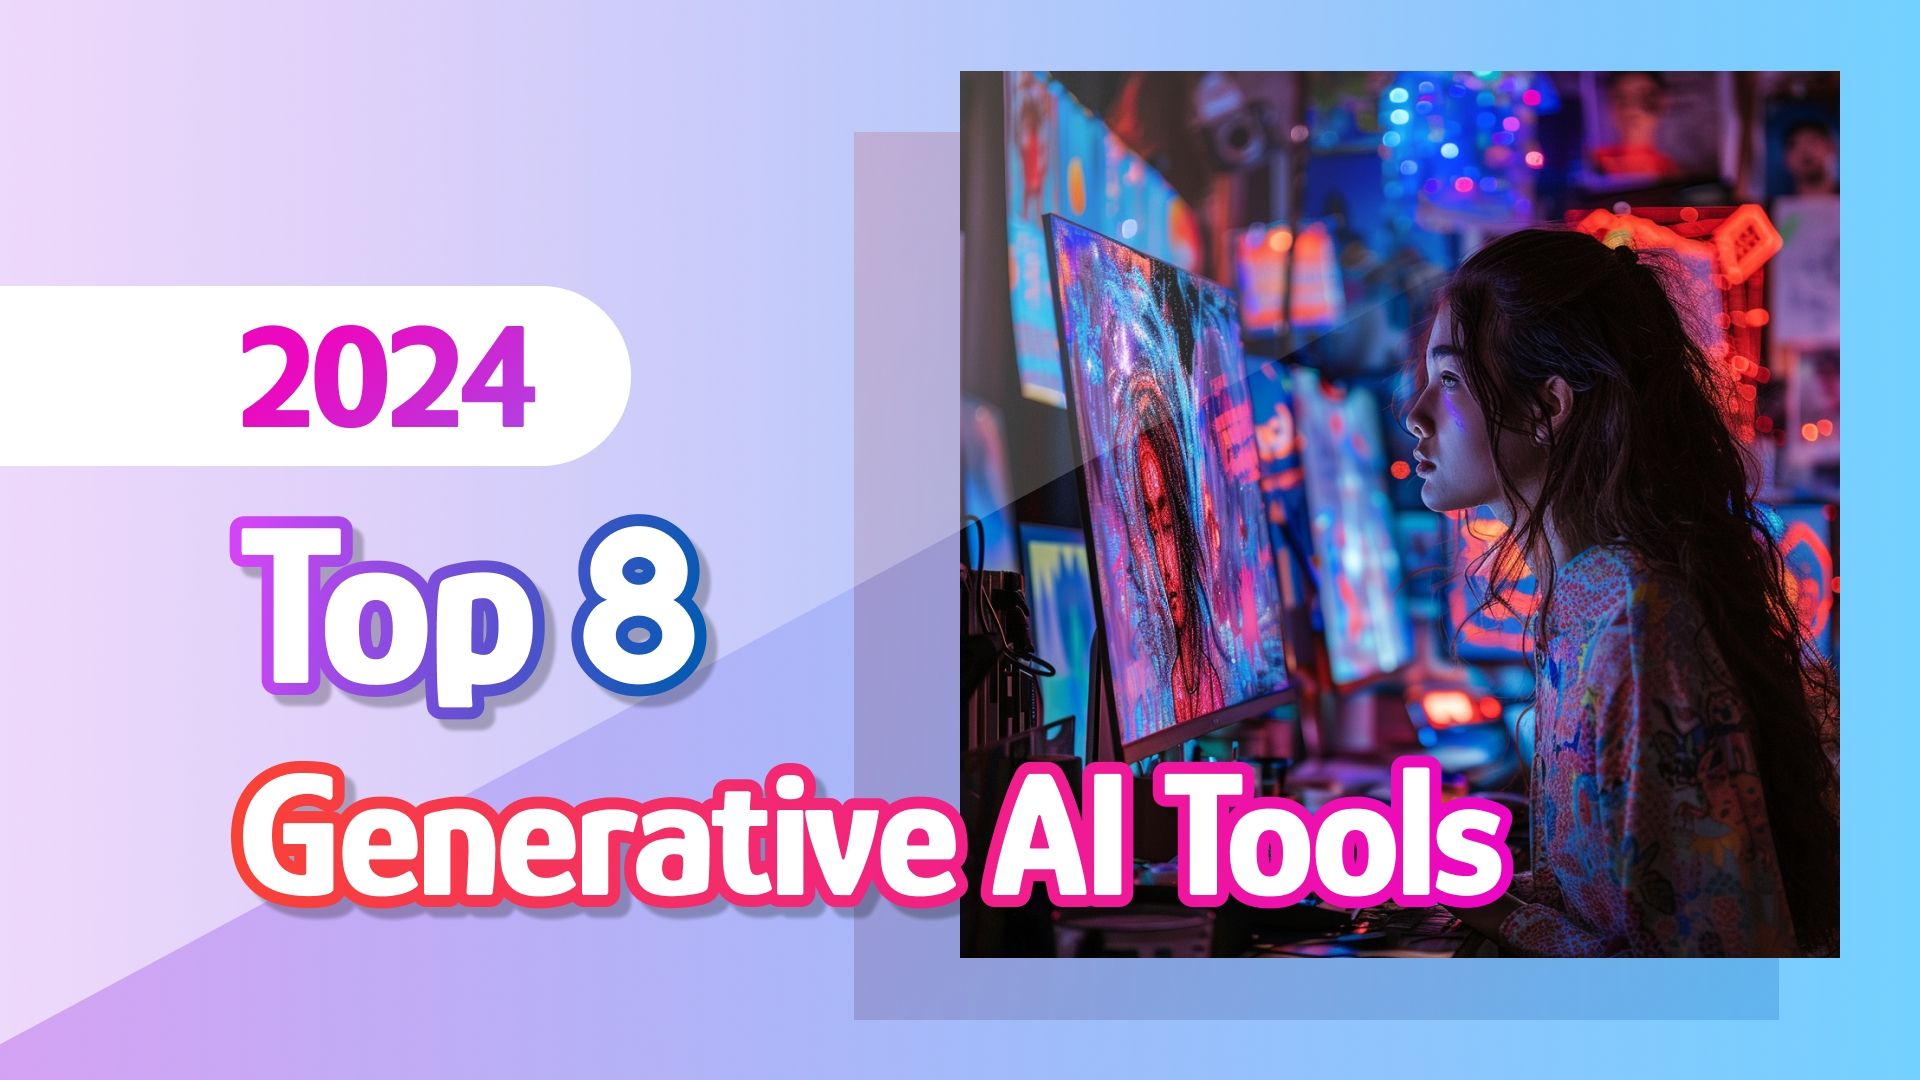 Top 8 Generative AI Tools in 2024